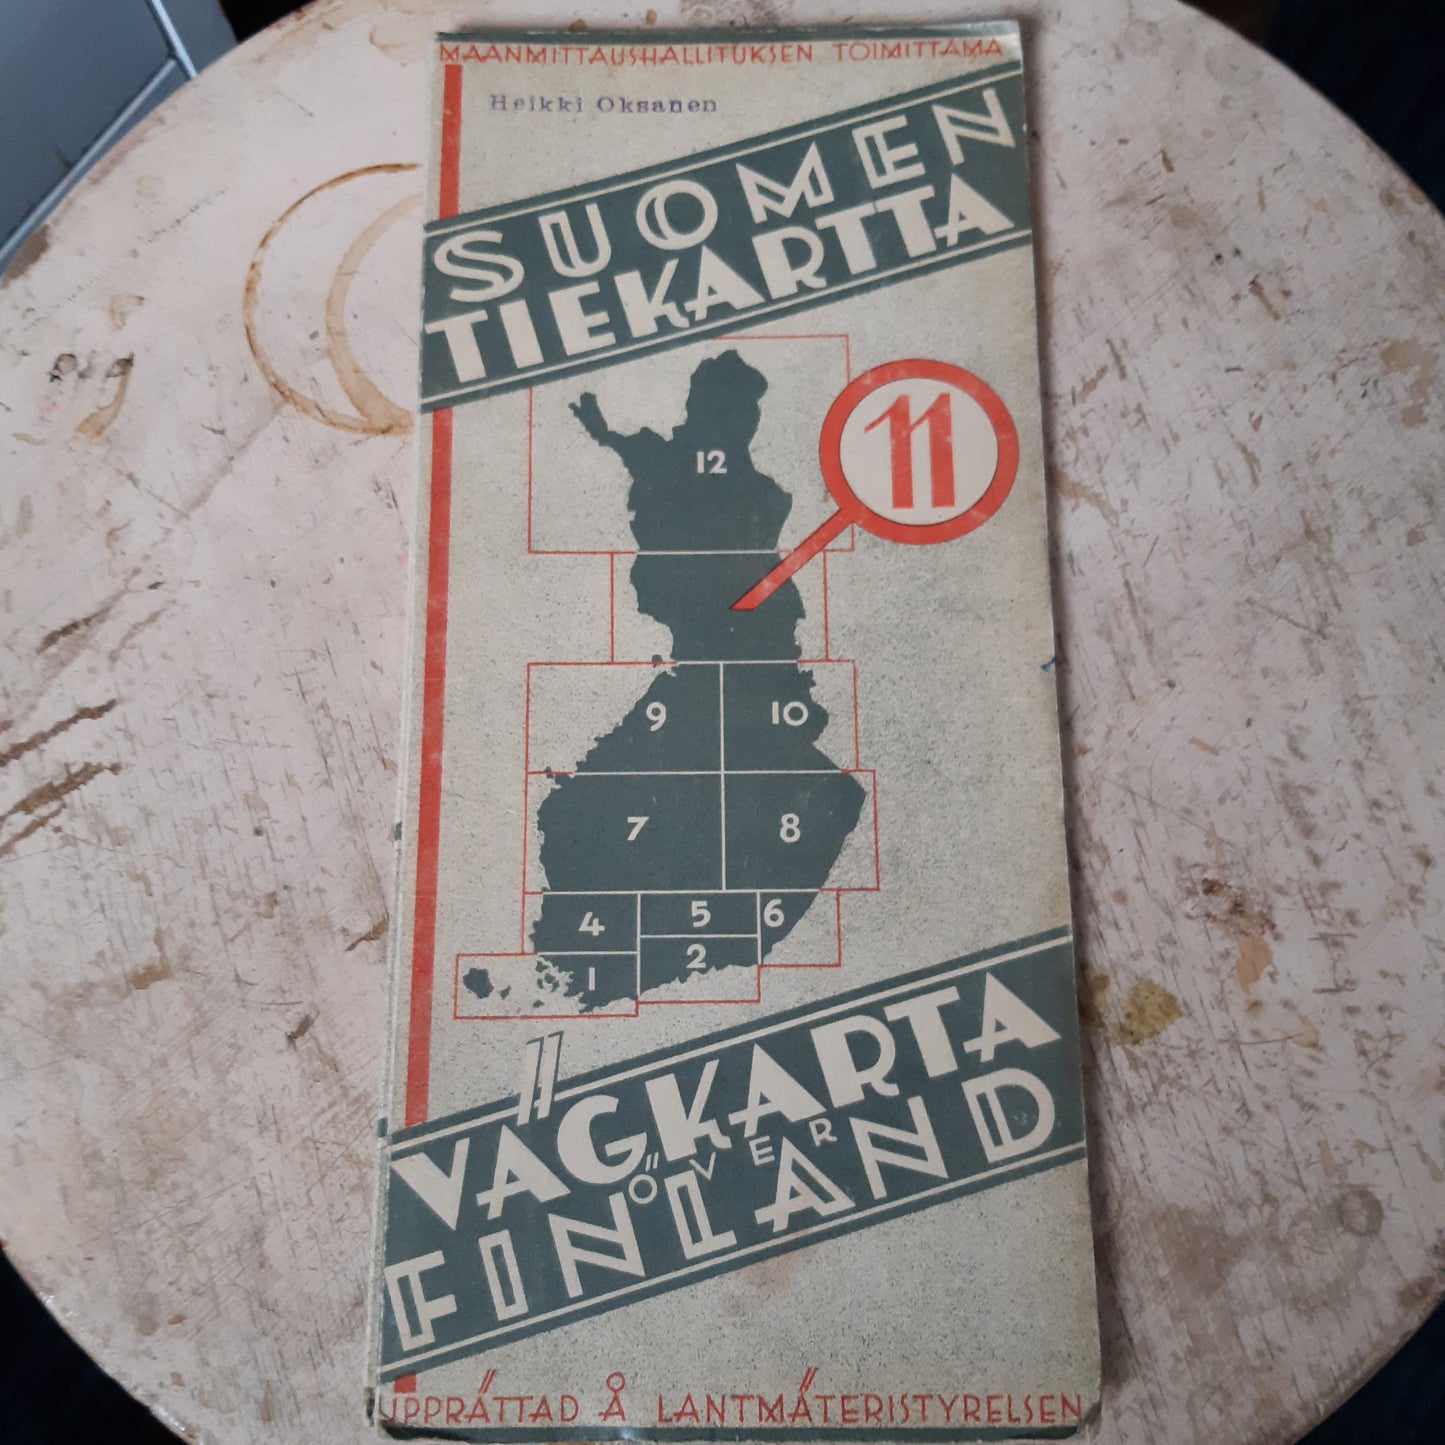 suomen tiekartta 11 - 1946